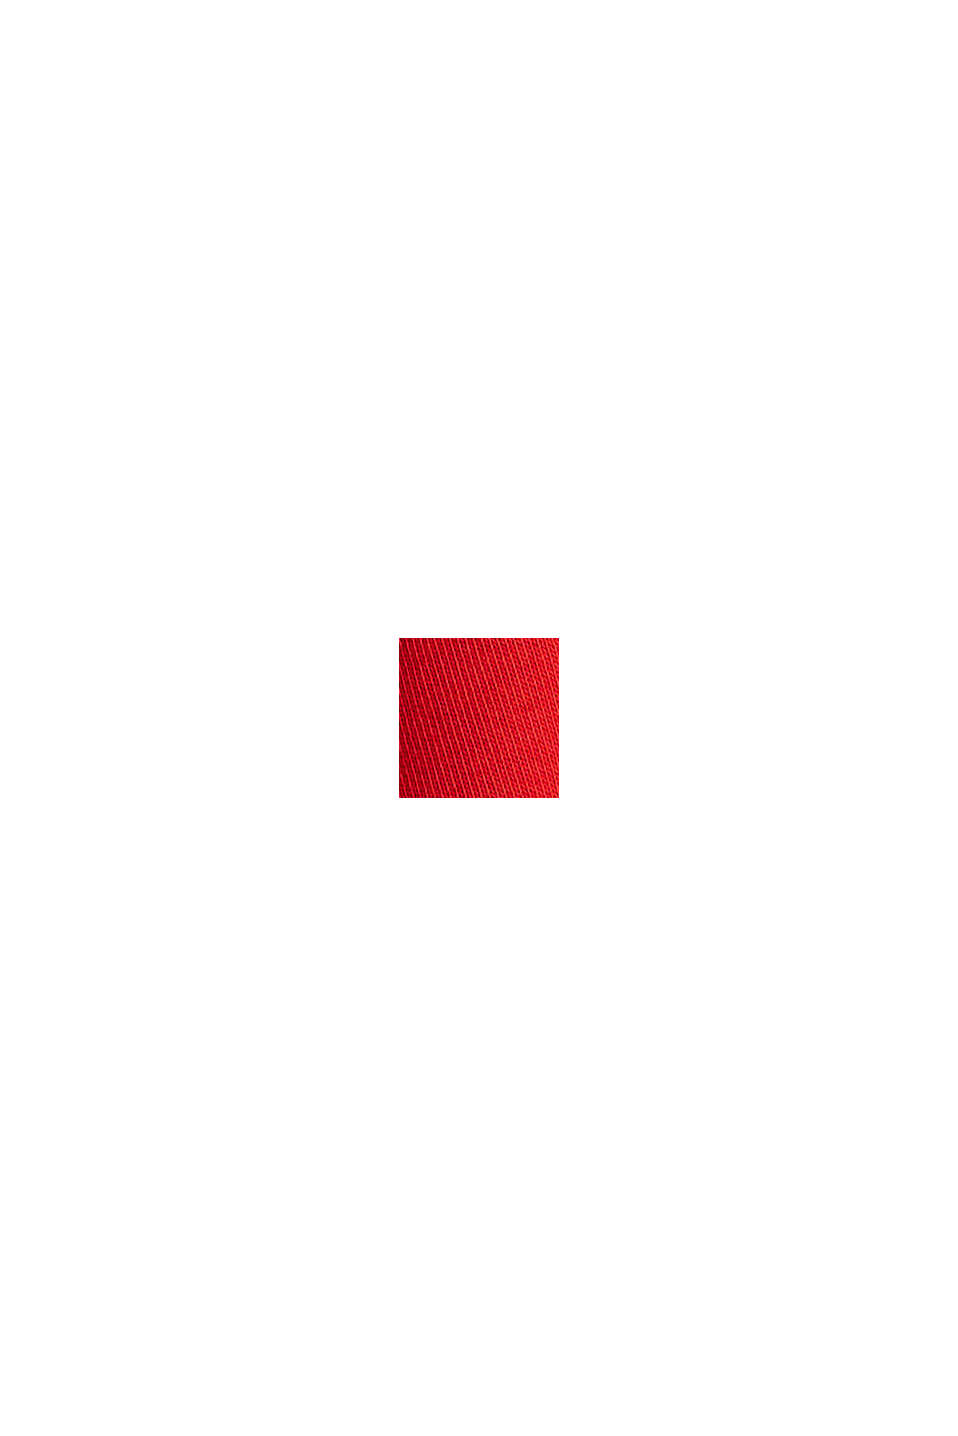 Logokirjailtu huppari puuvillasekoitetta, ORANGE RED, swatch